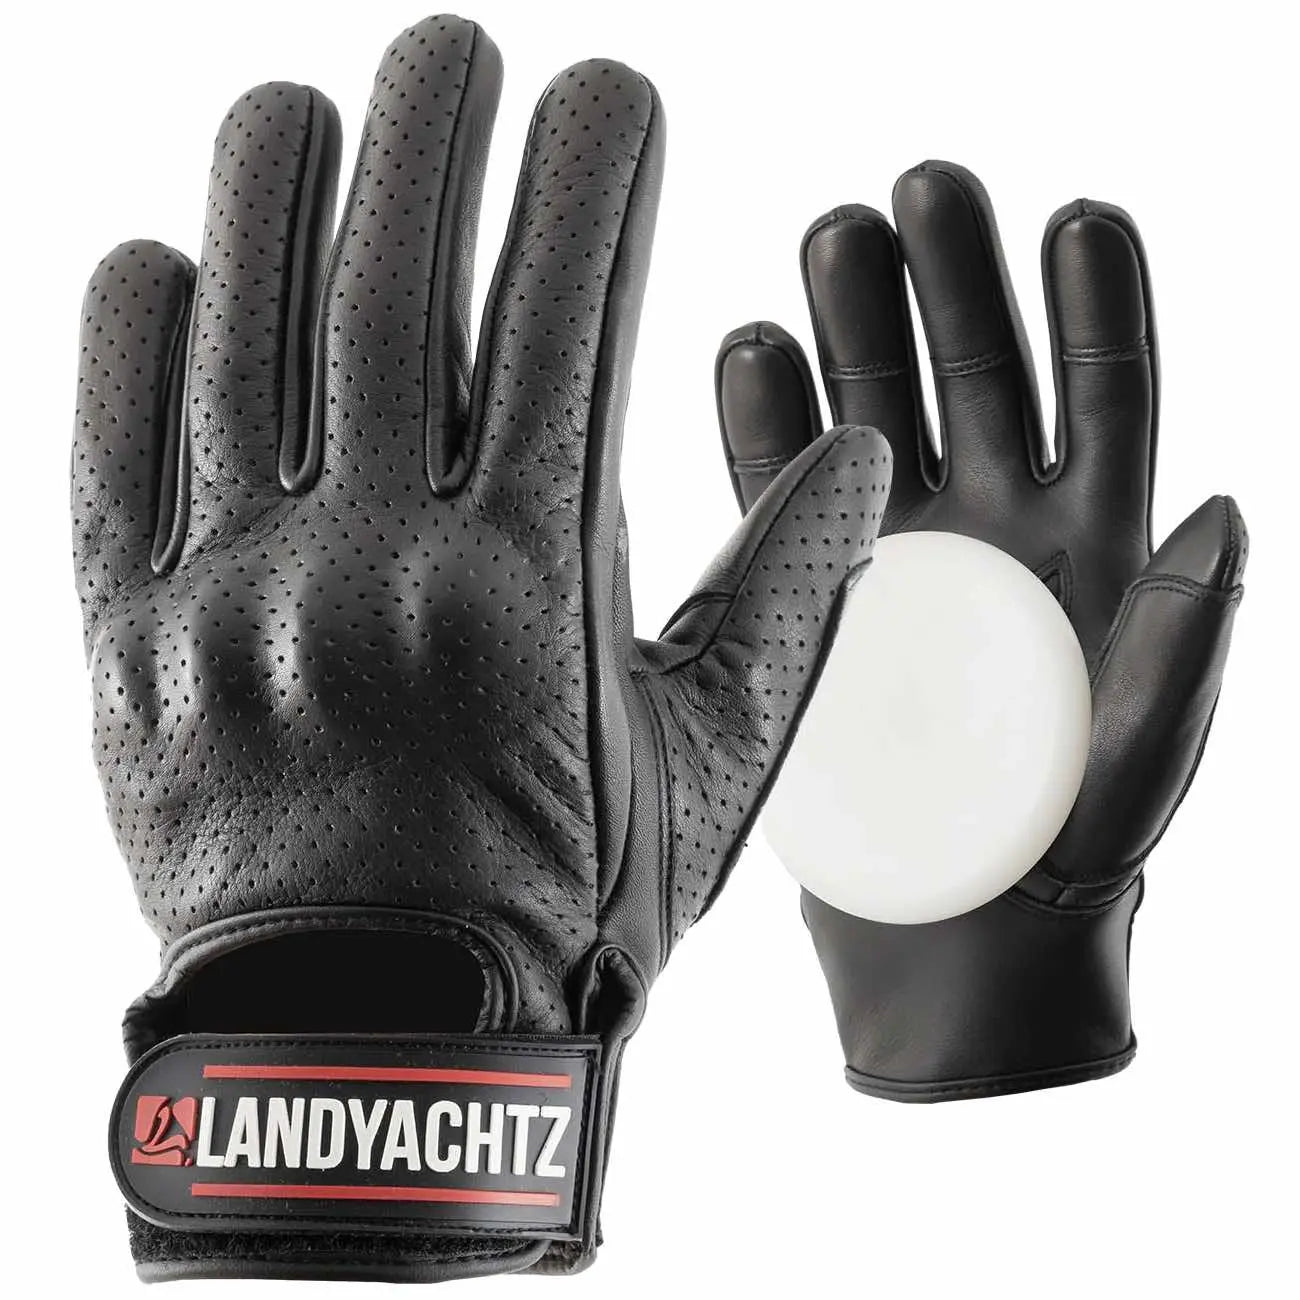 Landyachtz Longboard Race Gloves - Black LANDYACHTZ